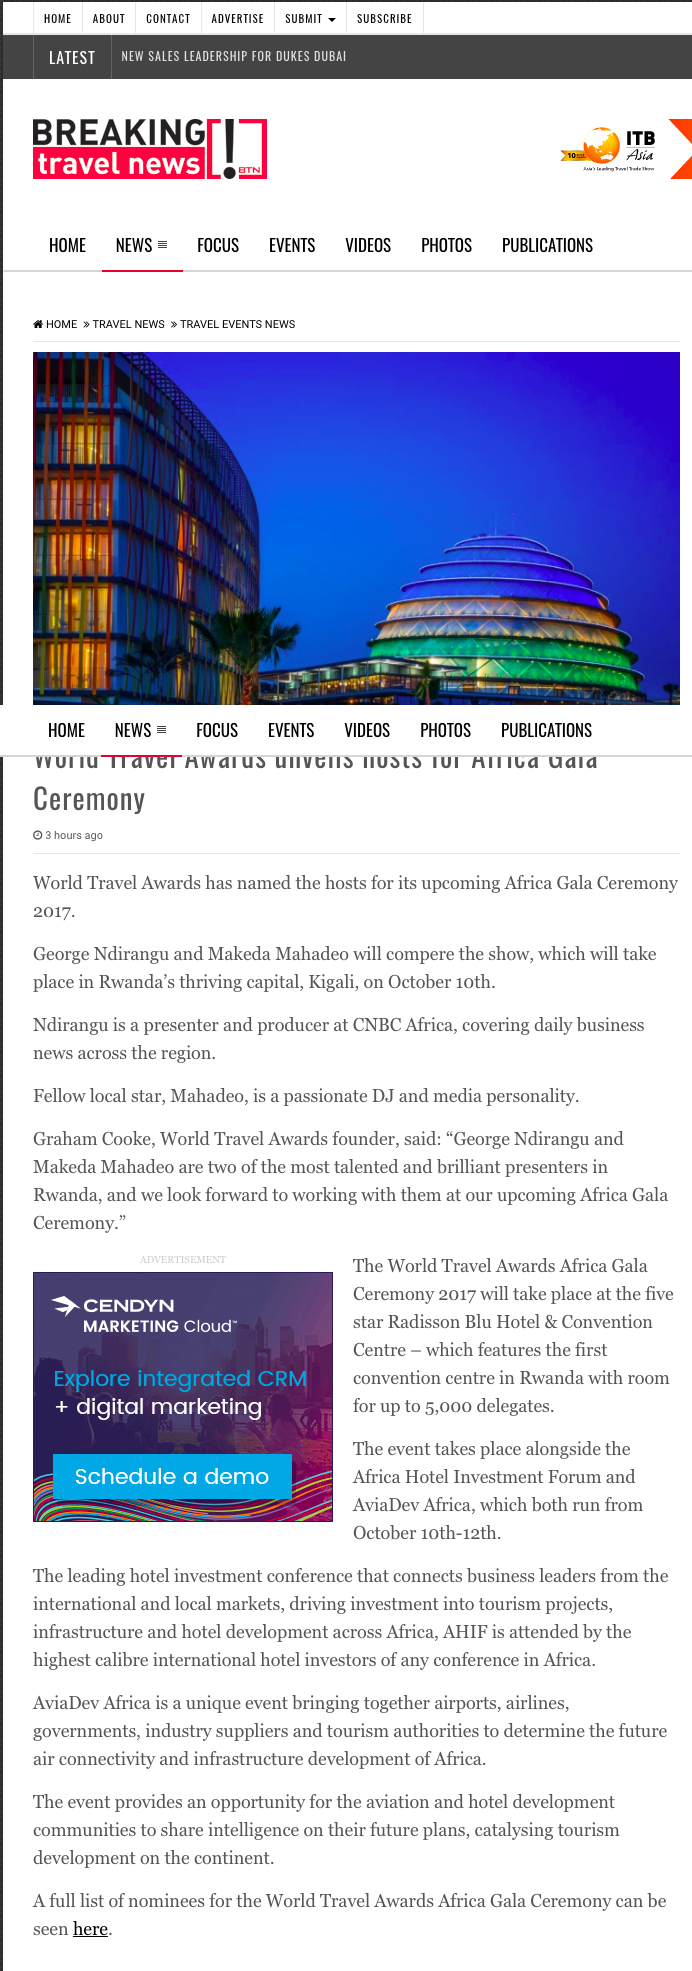 World Travel Awards unveils hosts for Africa Gala Ceremony